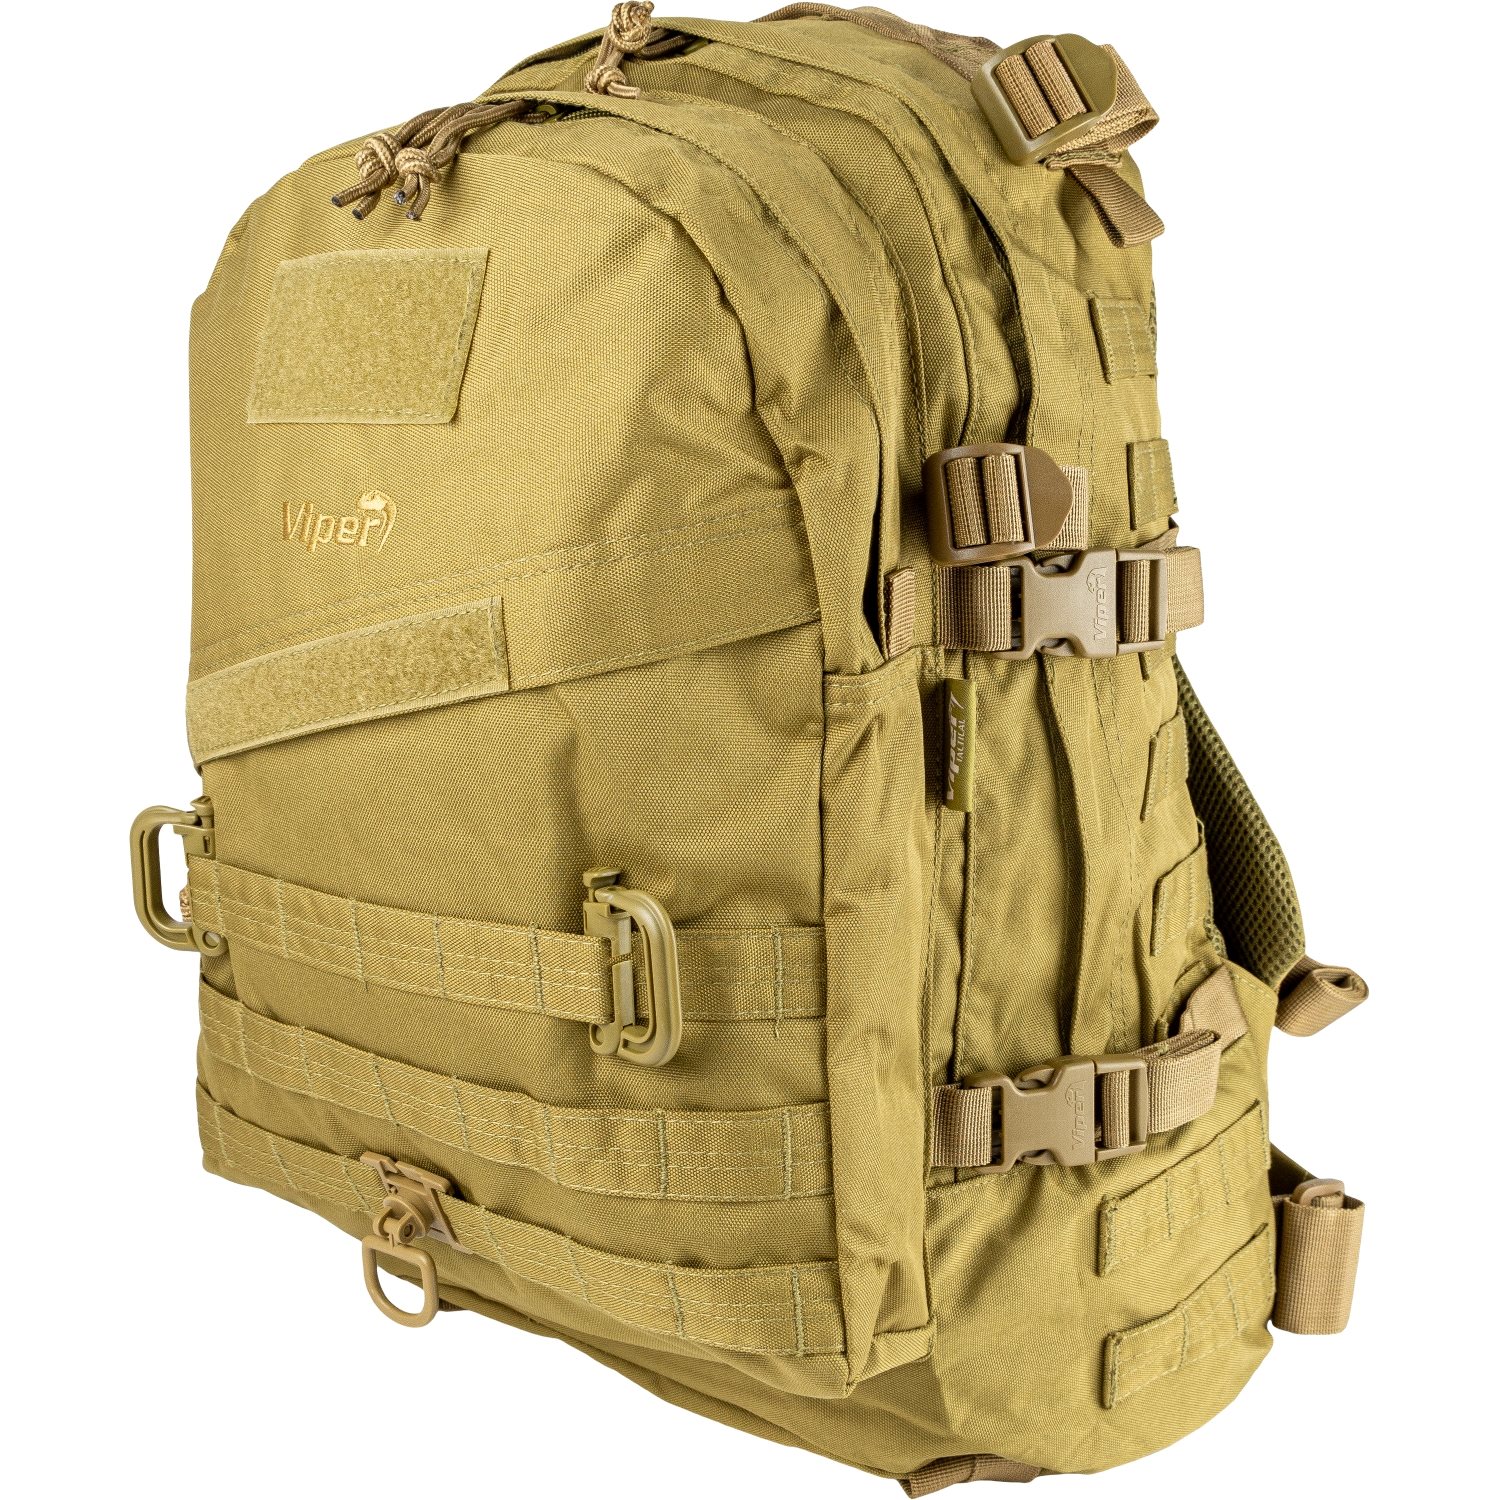 BLACK SPEC OPS PACK 45 LITRE BAG RUCKSACK MOLLE  Military backpack Army 